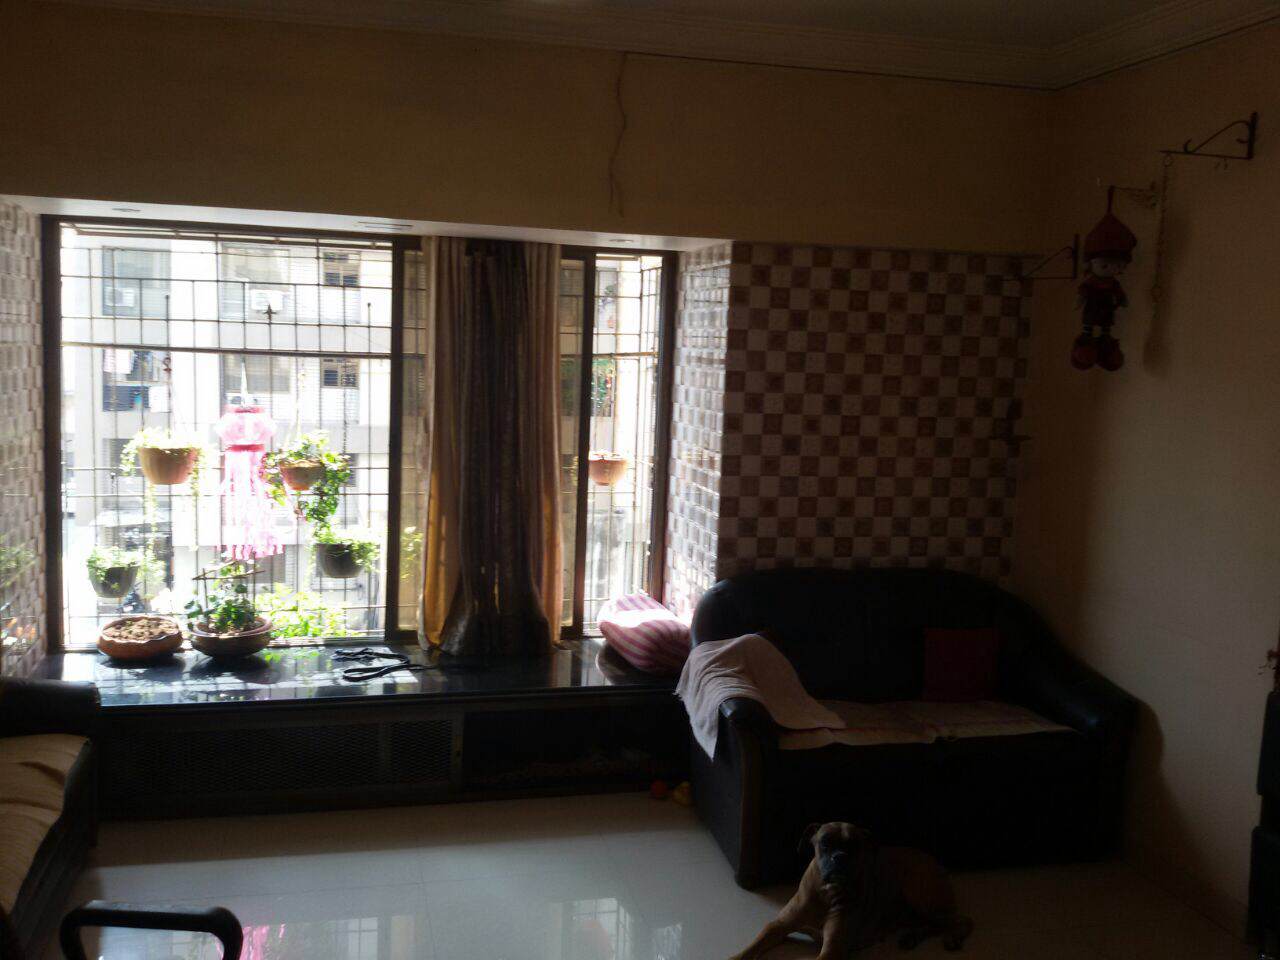 Residential Multistorey Apartment for Sale in Vihang Garden, Near Raymound Company. Next to Cadbury Junction., Thane-West, Mumbai